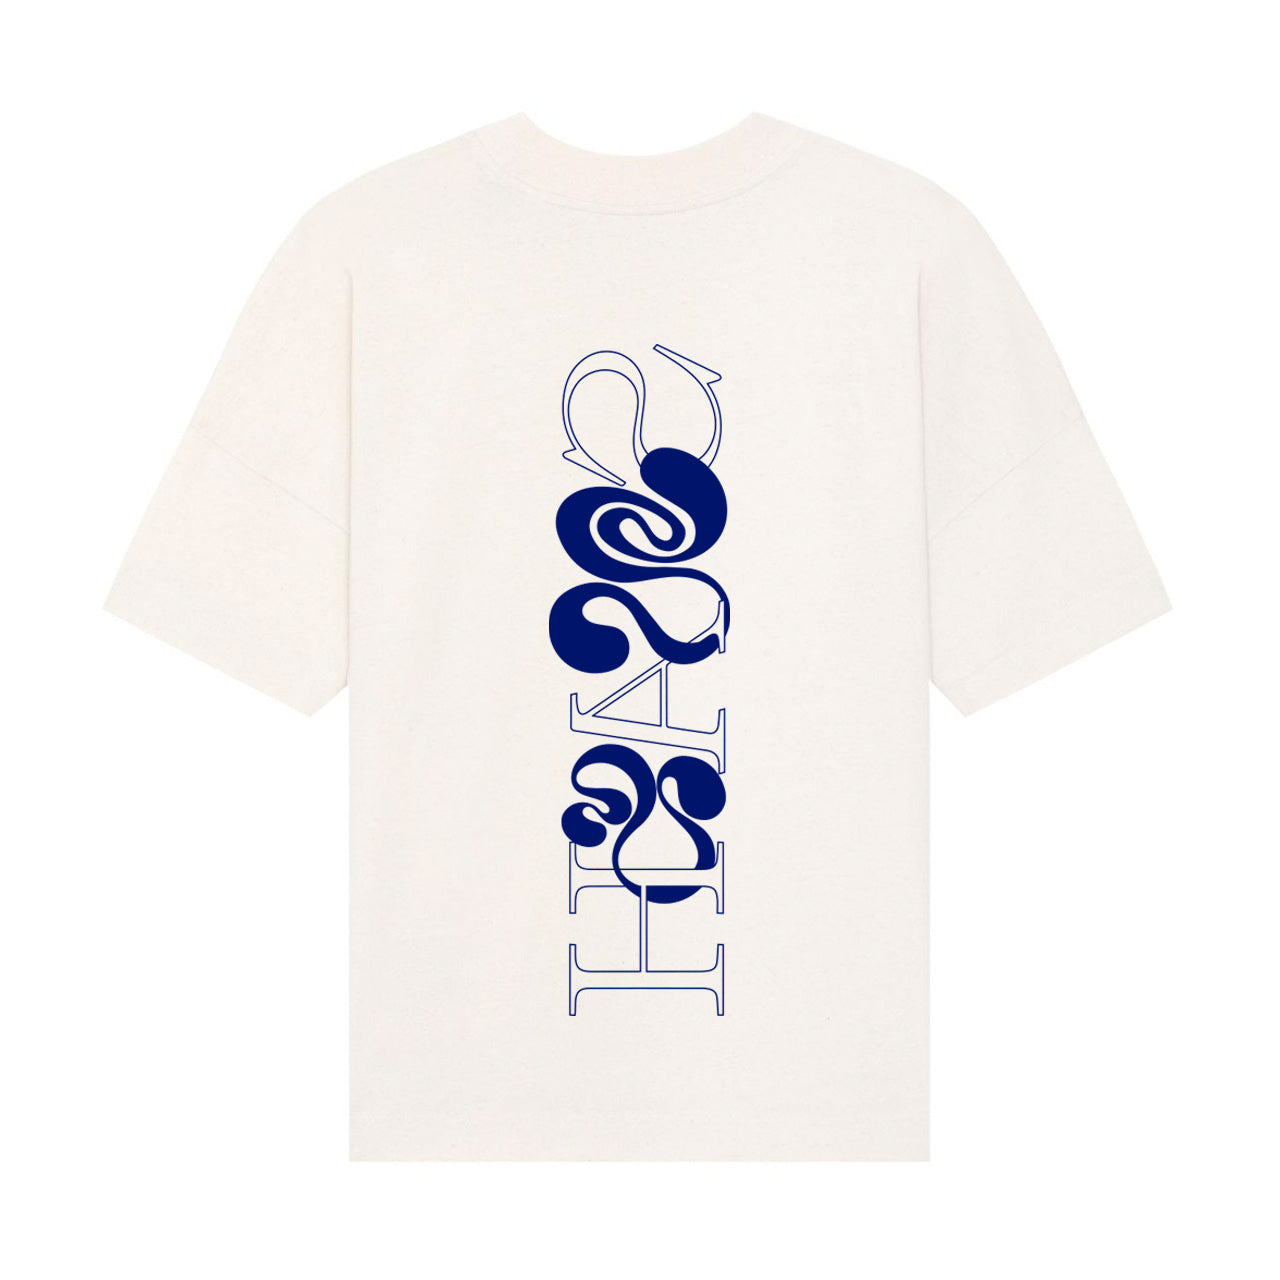 Snash - Swirl T-Shirt